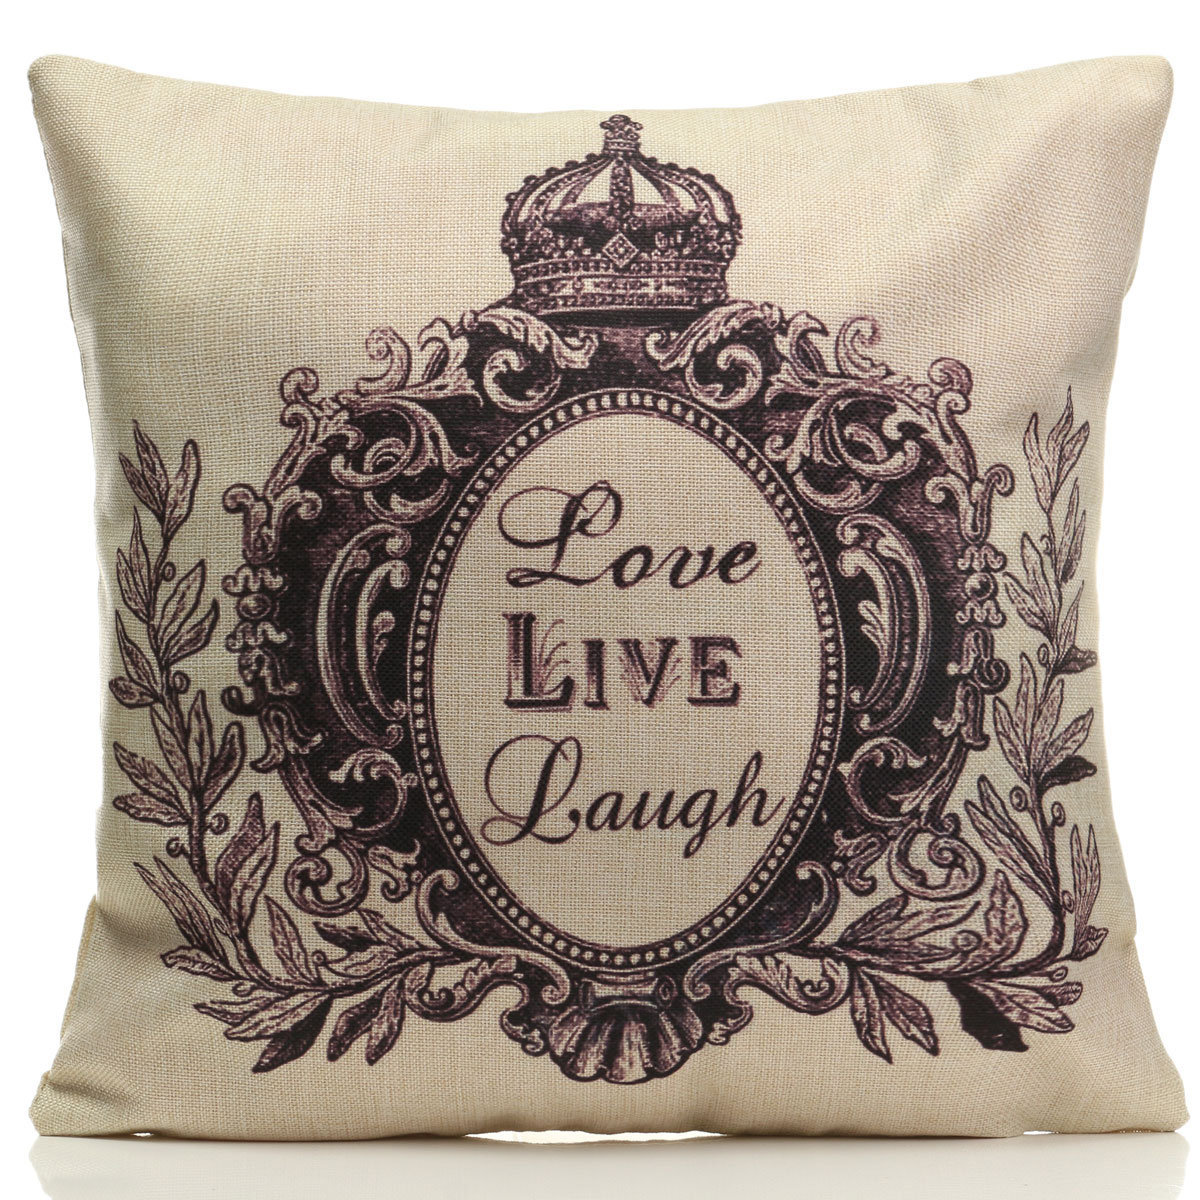 Black Royal Letters Cotton Linen Throw Pillow Case Sofa Office Cushion Cover Home Decor